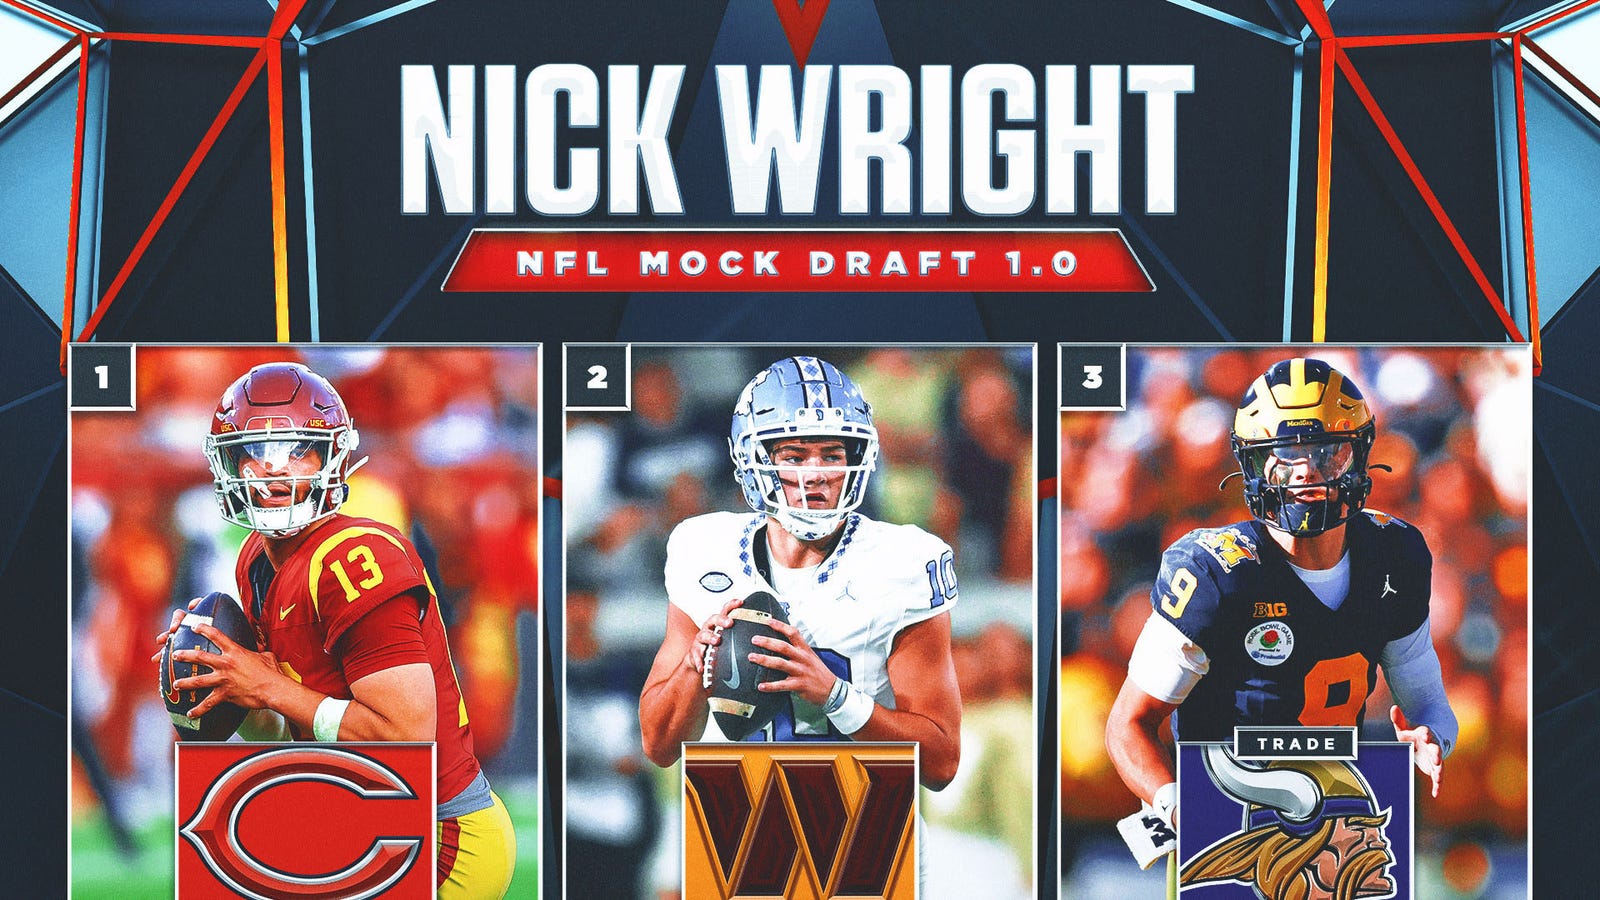 Caleb Williams, J.J. McCarthy headline Nick Wright’s NFL Mock Draft